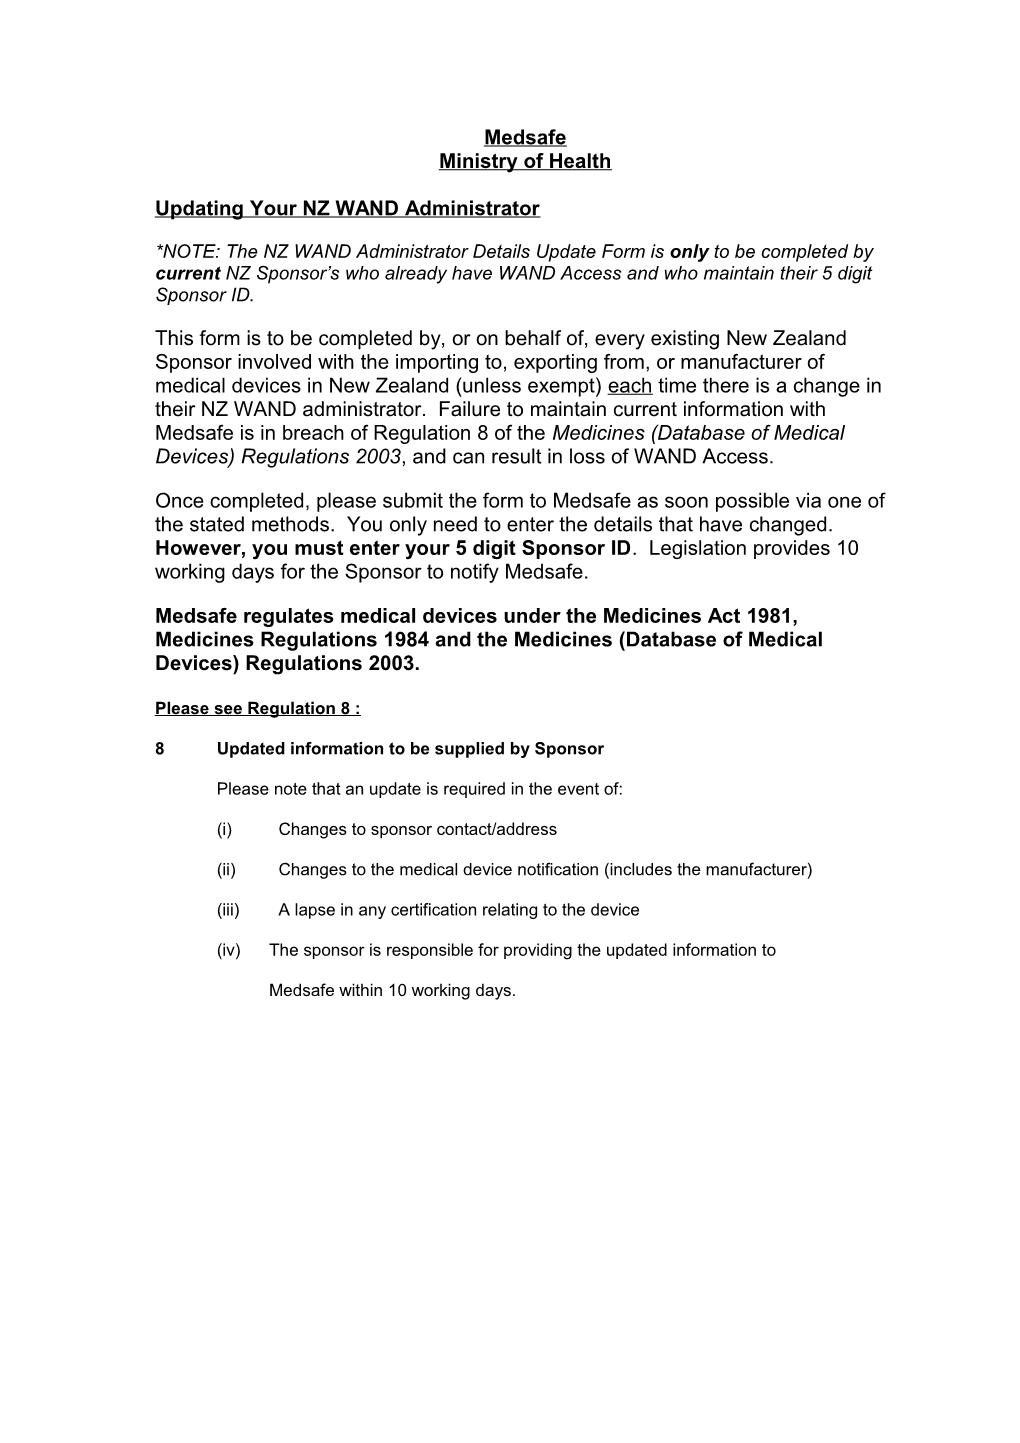 NZ WAND Administrator Details Update Form